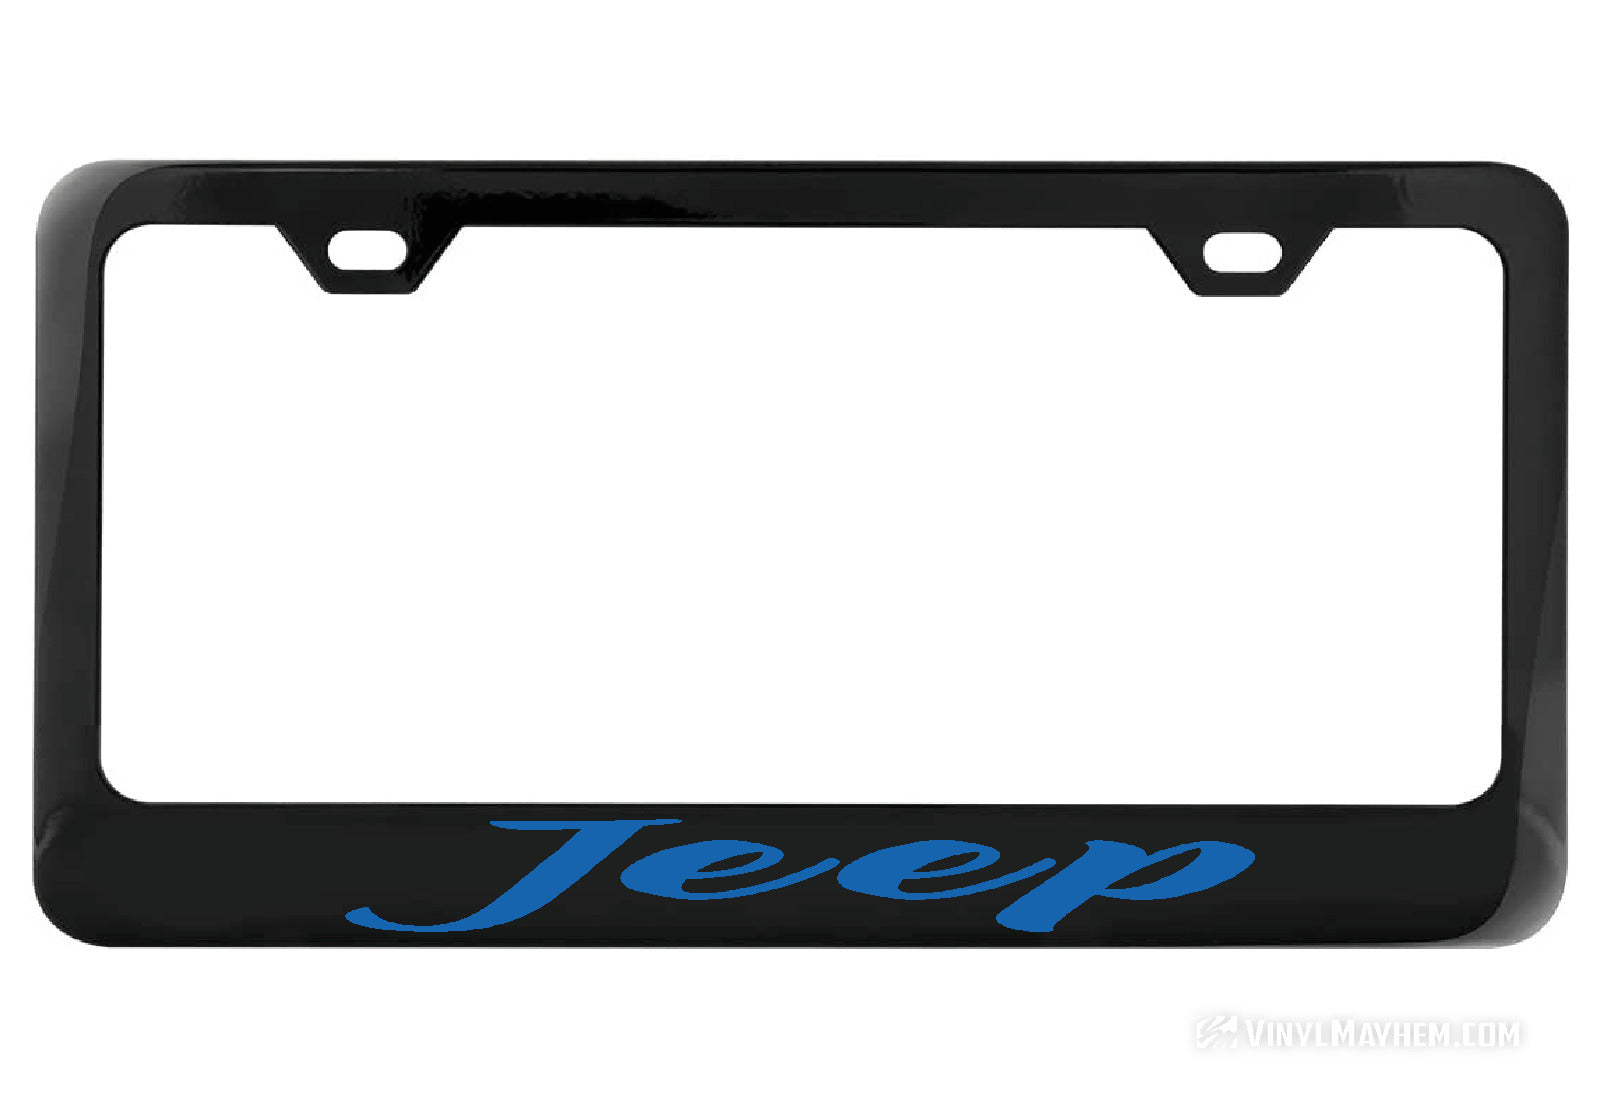 Jeep black license plate frame